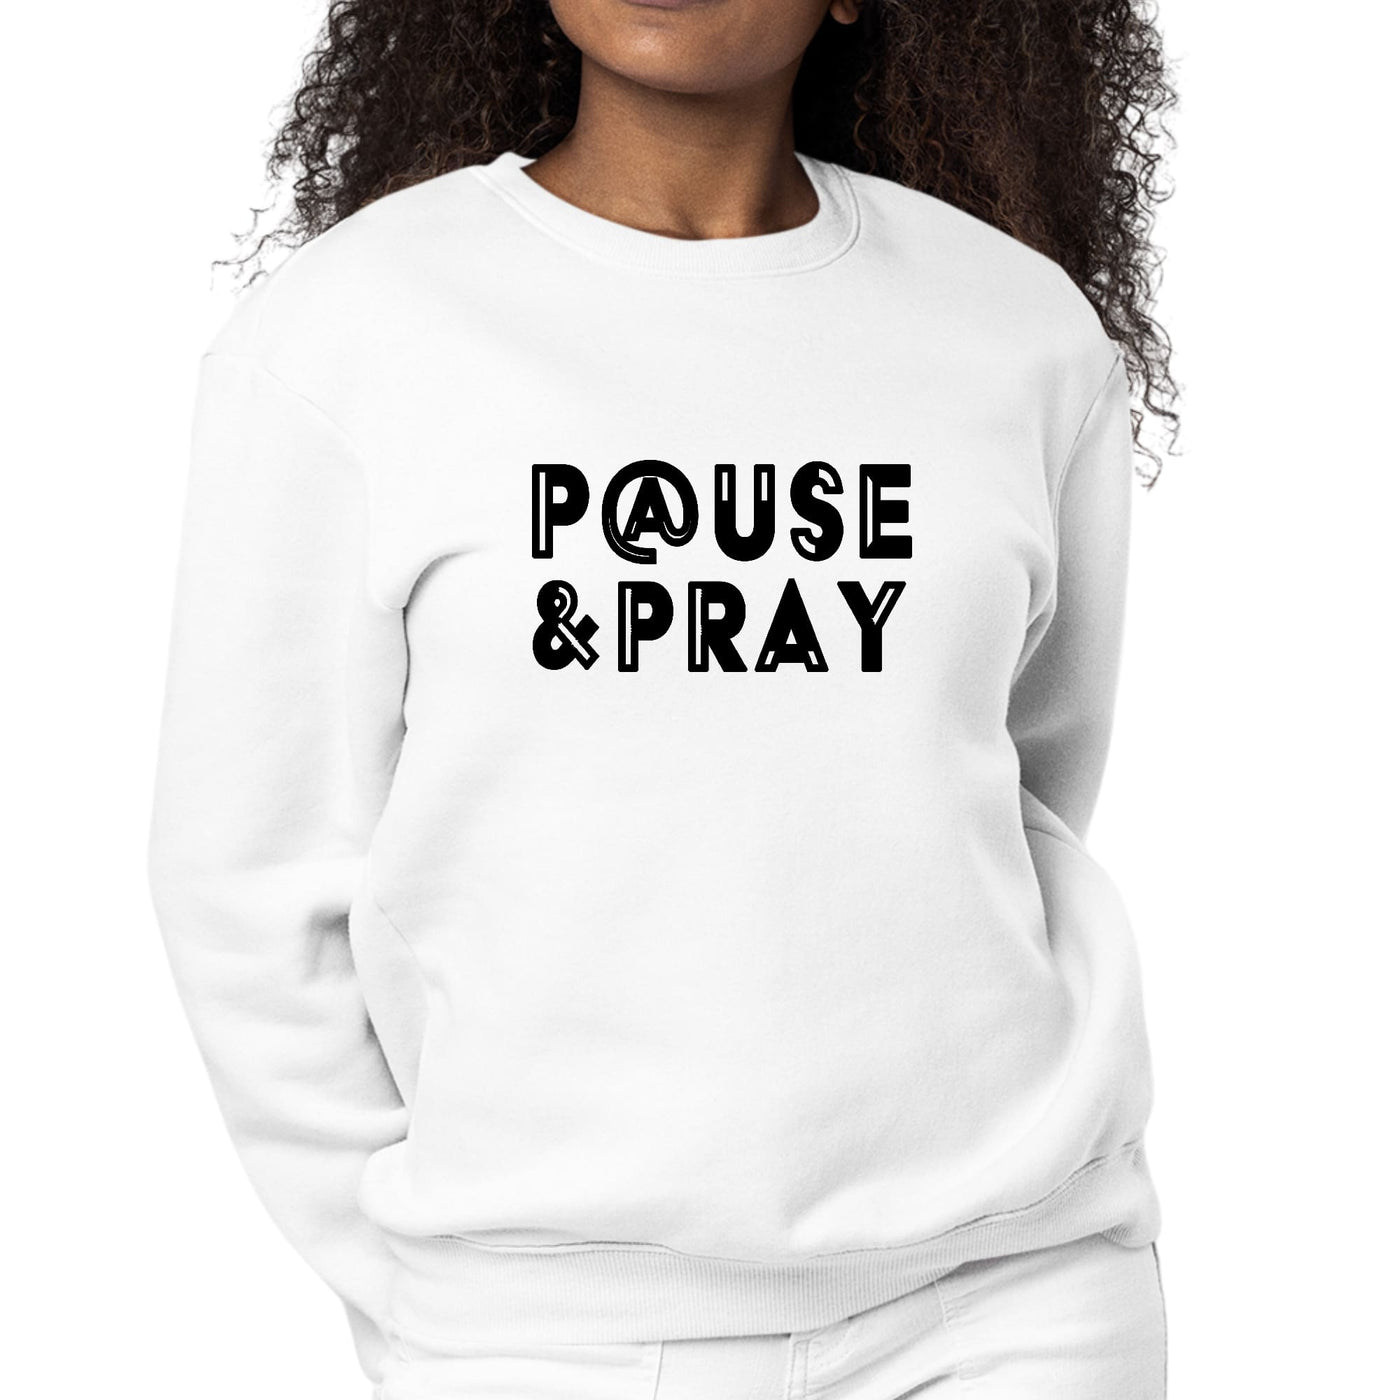 Womens Graphic Sweatshirt Pause And Pray Black Illustration - Womens